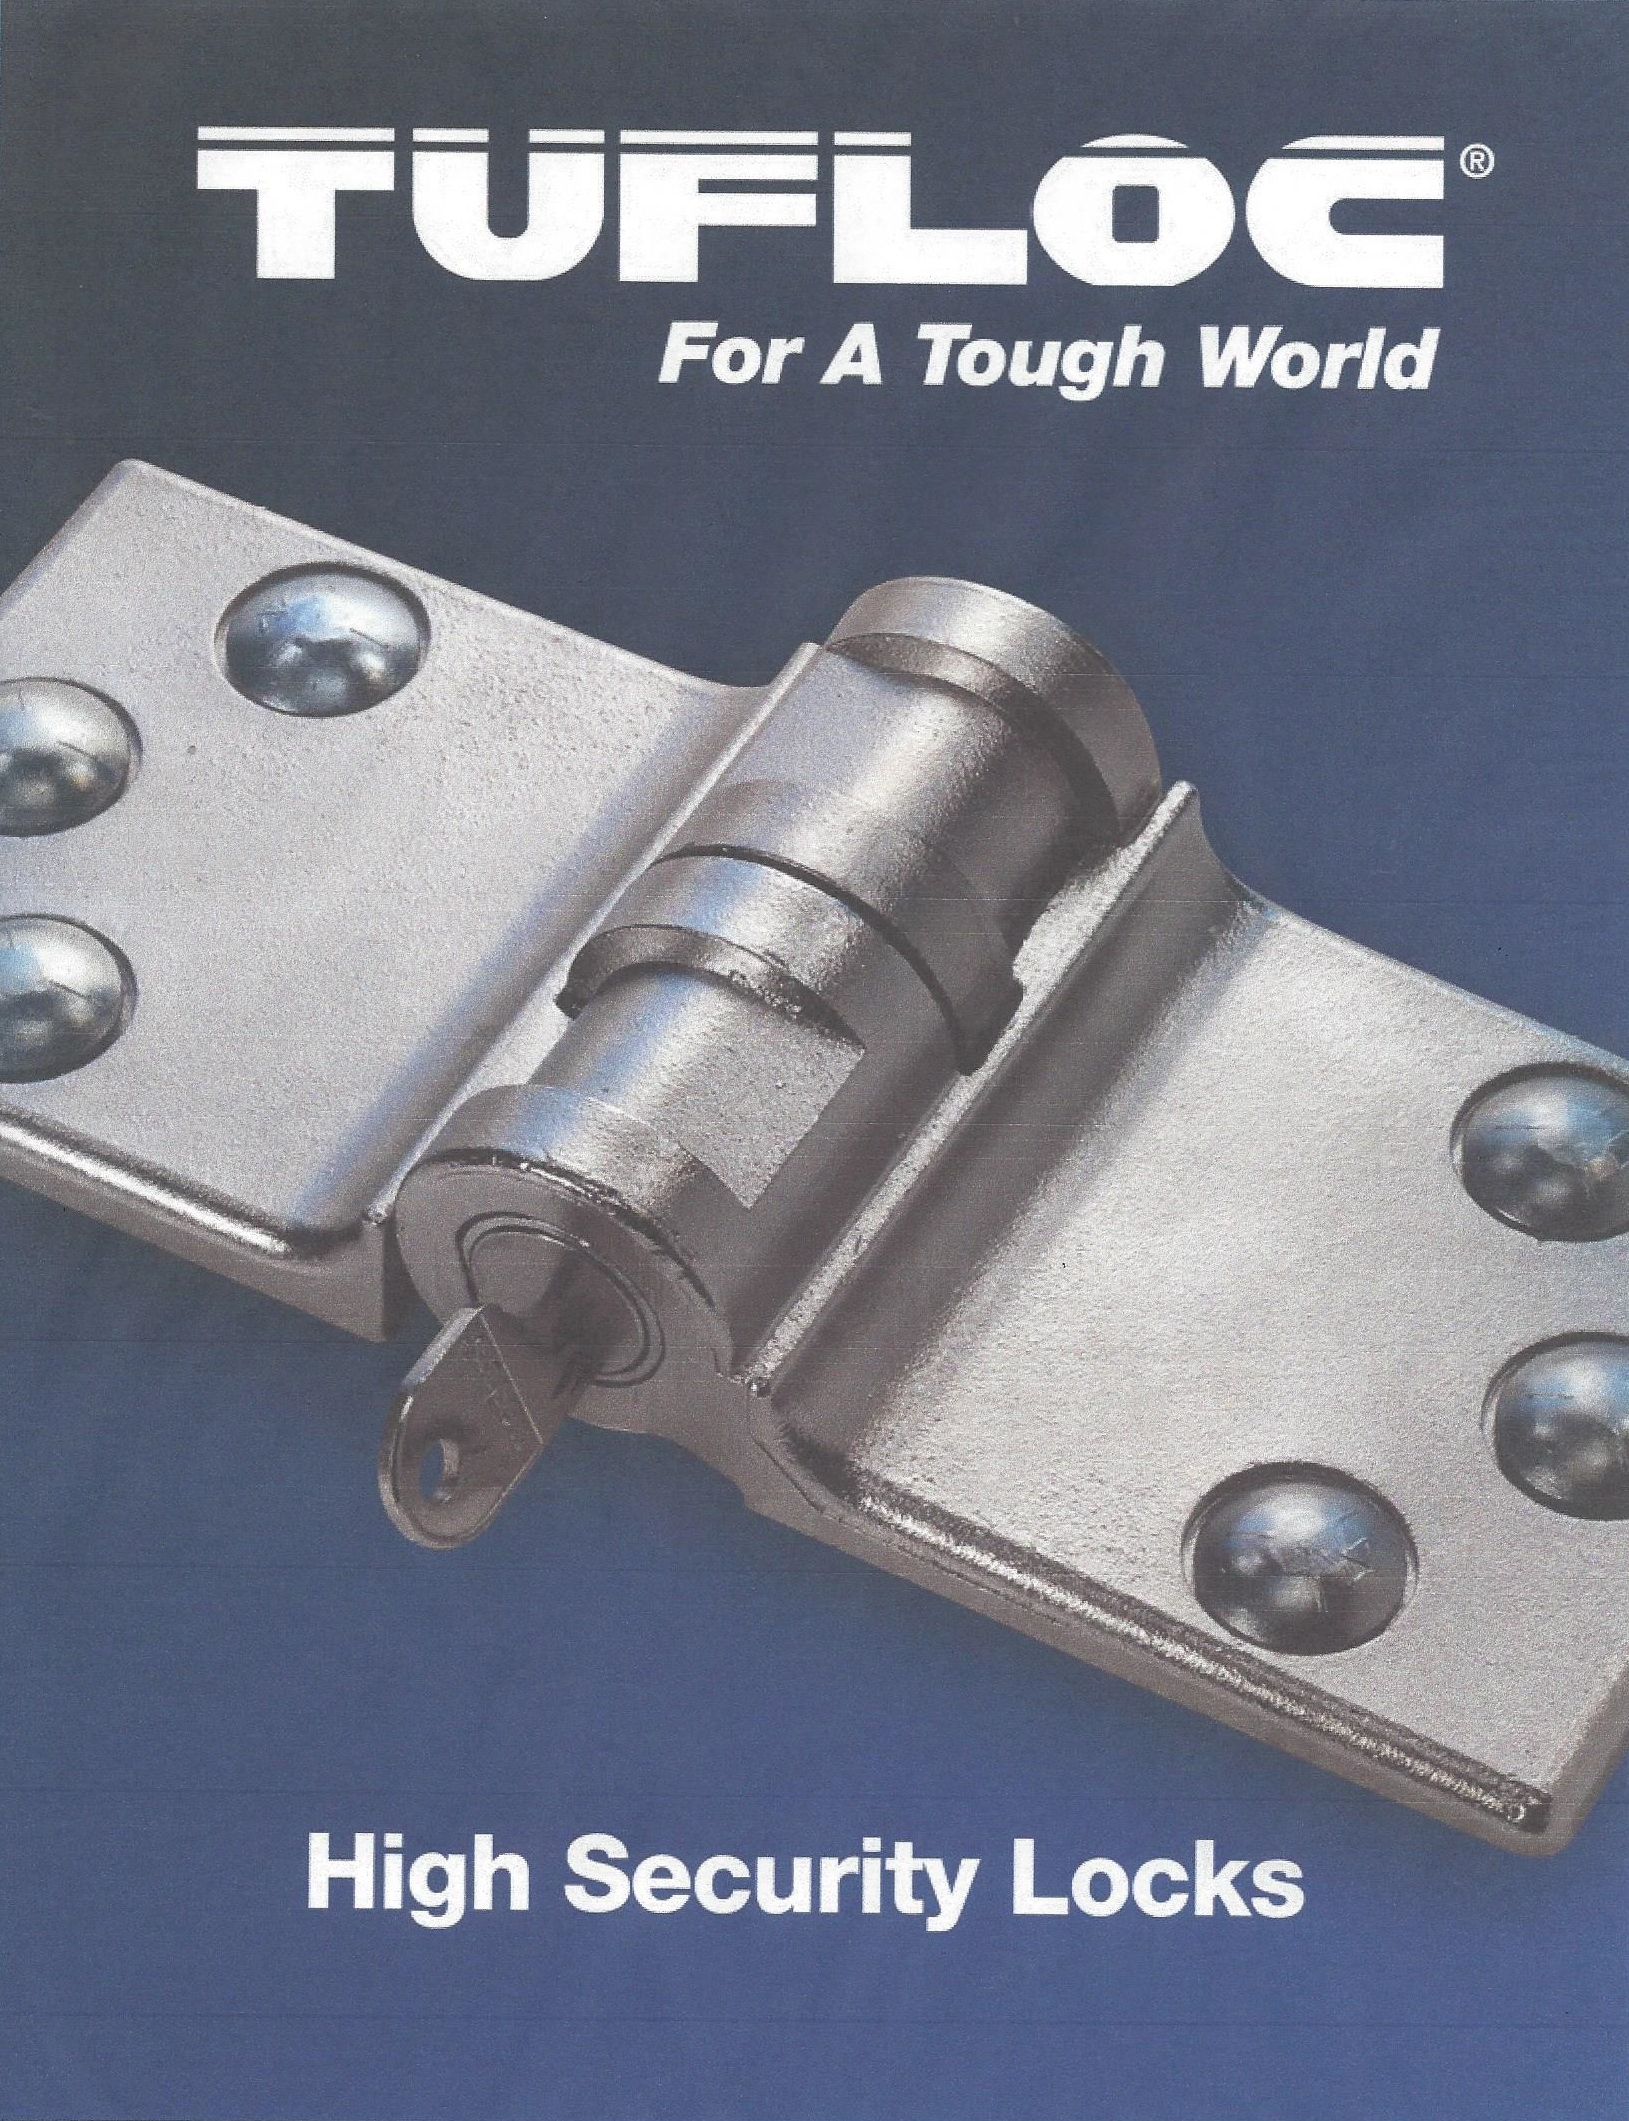 Tufloc High Security Locks